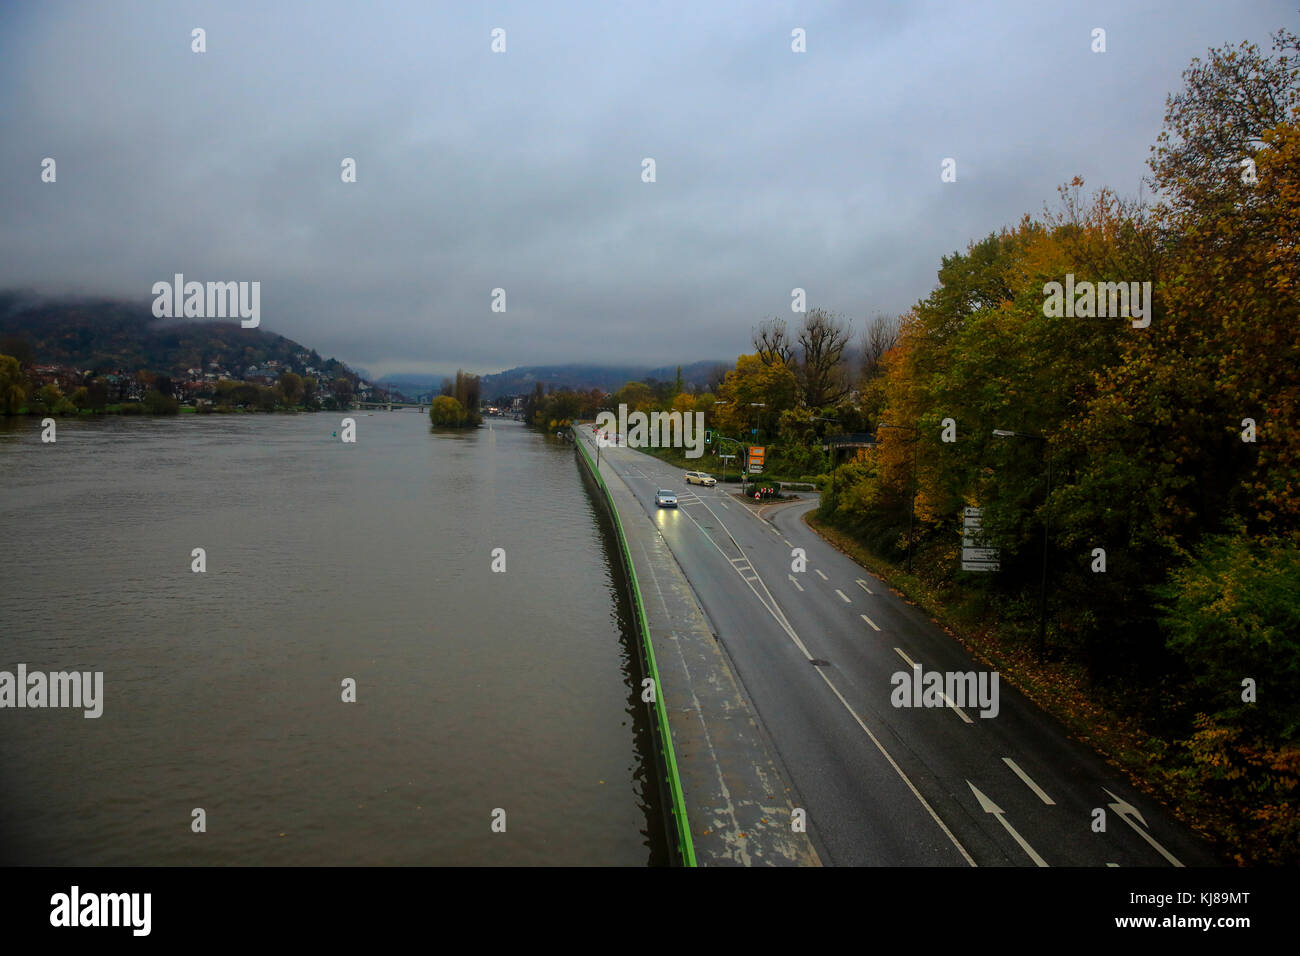 View of the Neckar River at Heidelberg in Germany. Stock Photo